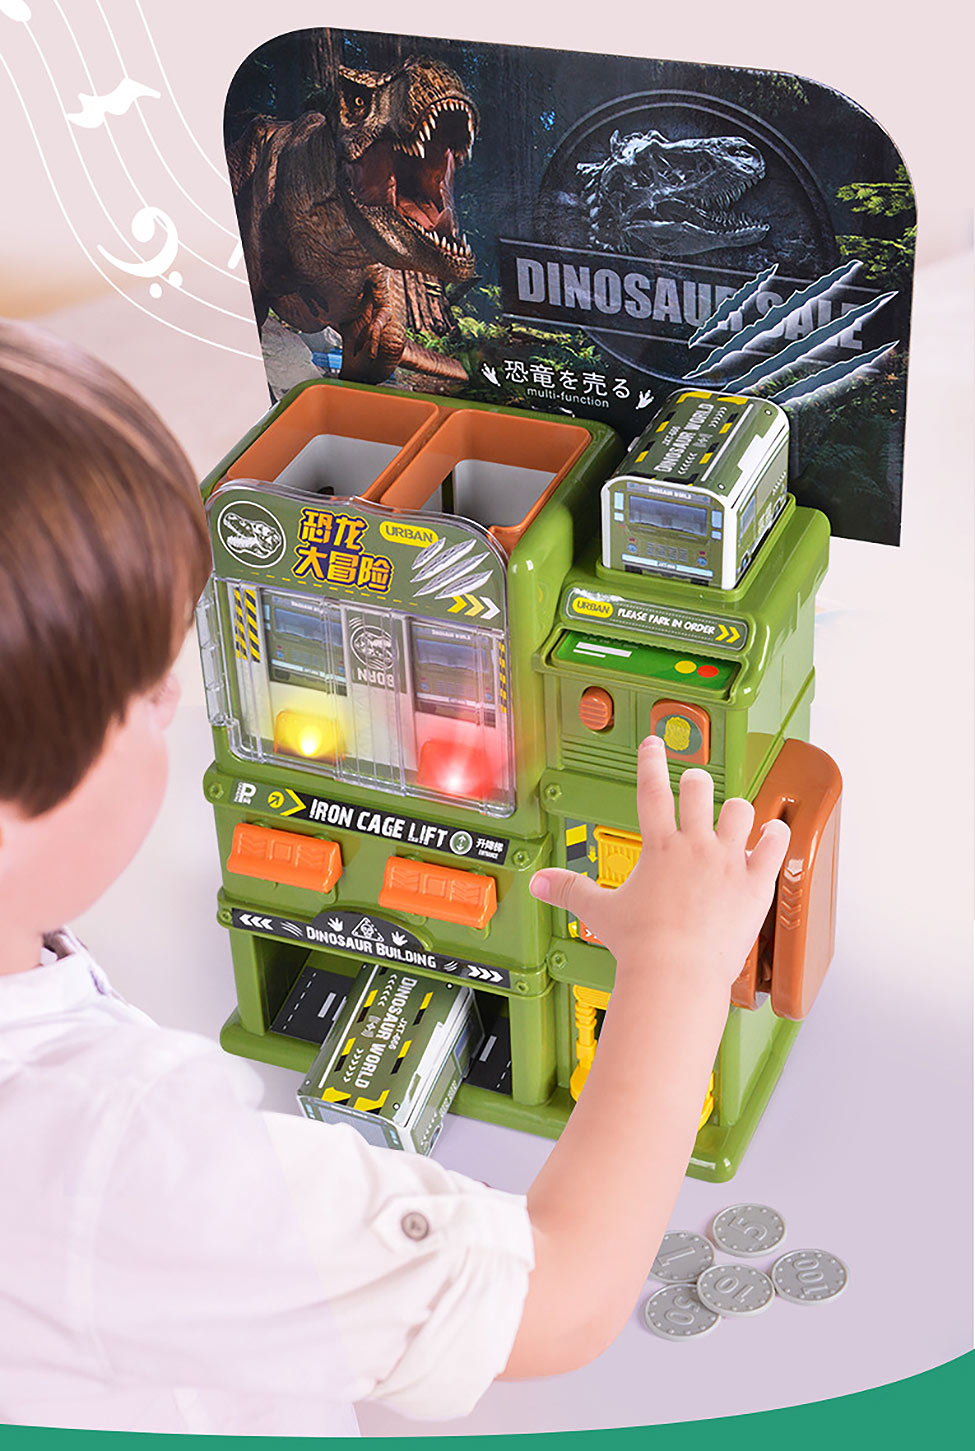 Otomatis-Dinosaur-Bangunan-Mesin-Vending-Mainan-dengan-10-Dinosaur-Figurine-9